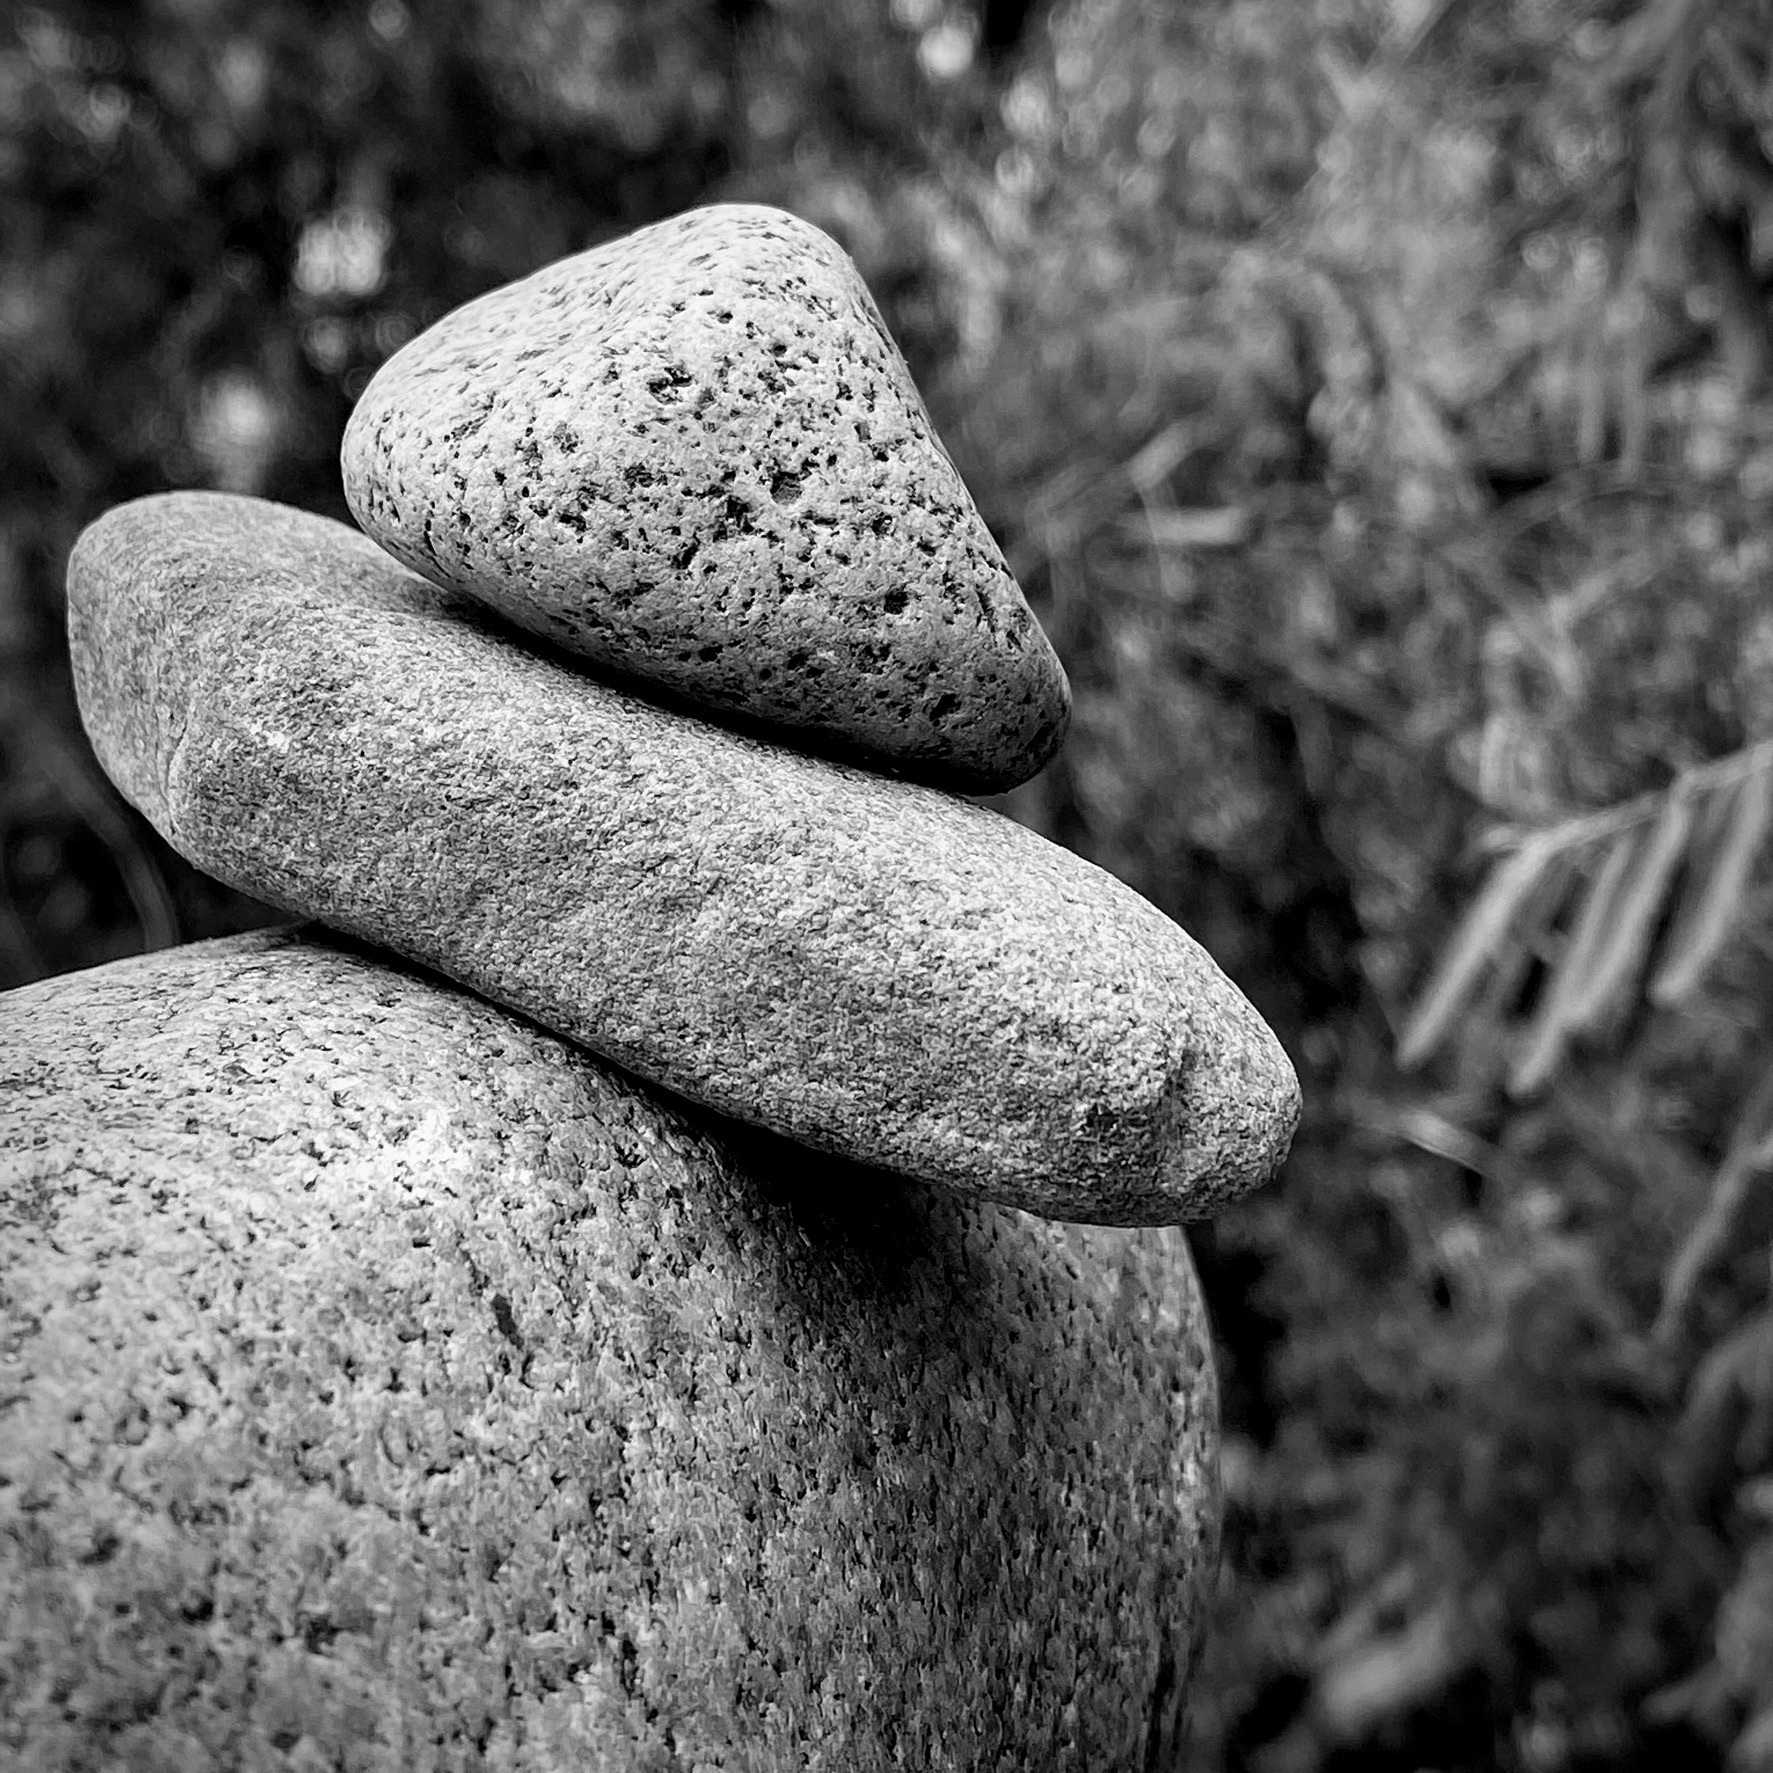 Rocks balanced on each other.